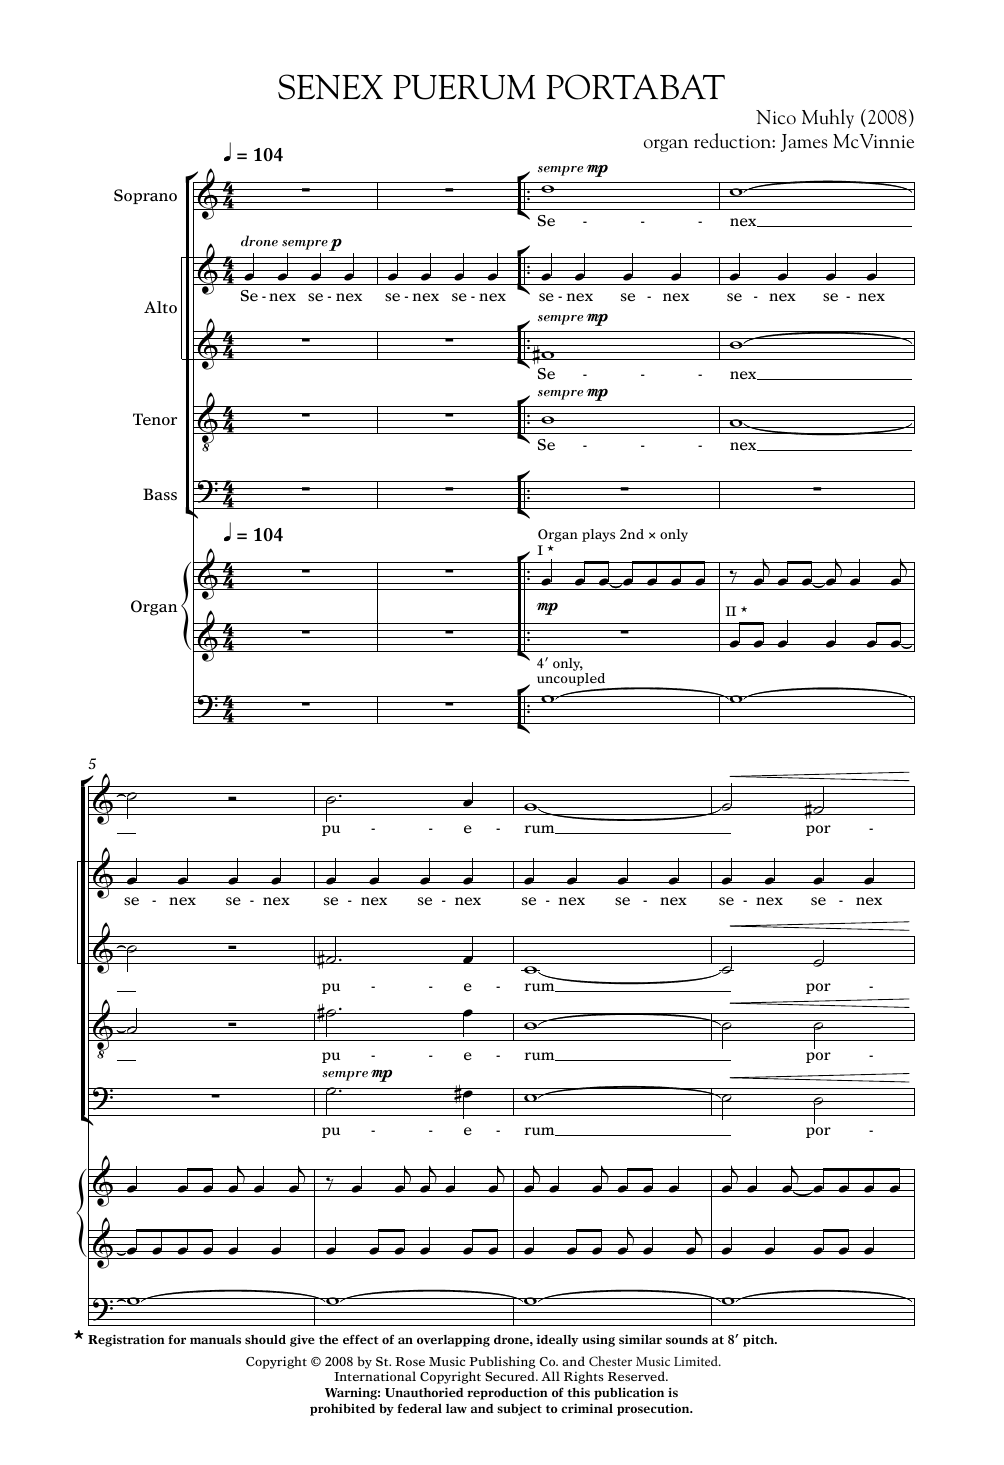 Nico Muhly Senex Puerum Portabat Sheet Music Notes & Chords for SATB Choir - Download or Print PDF